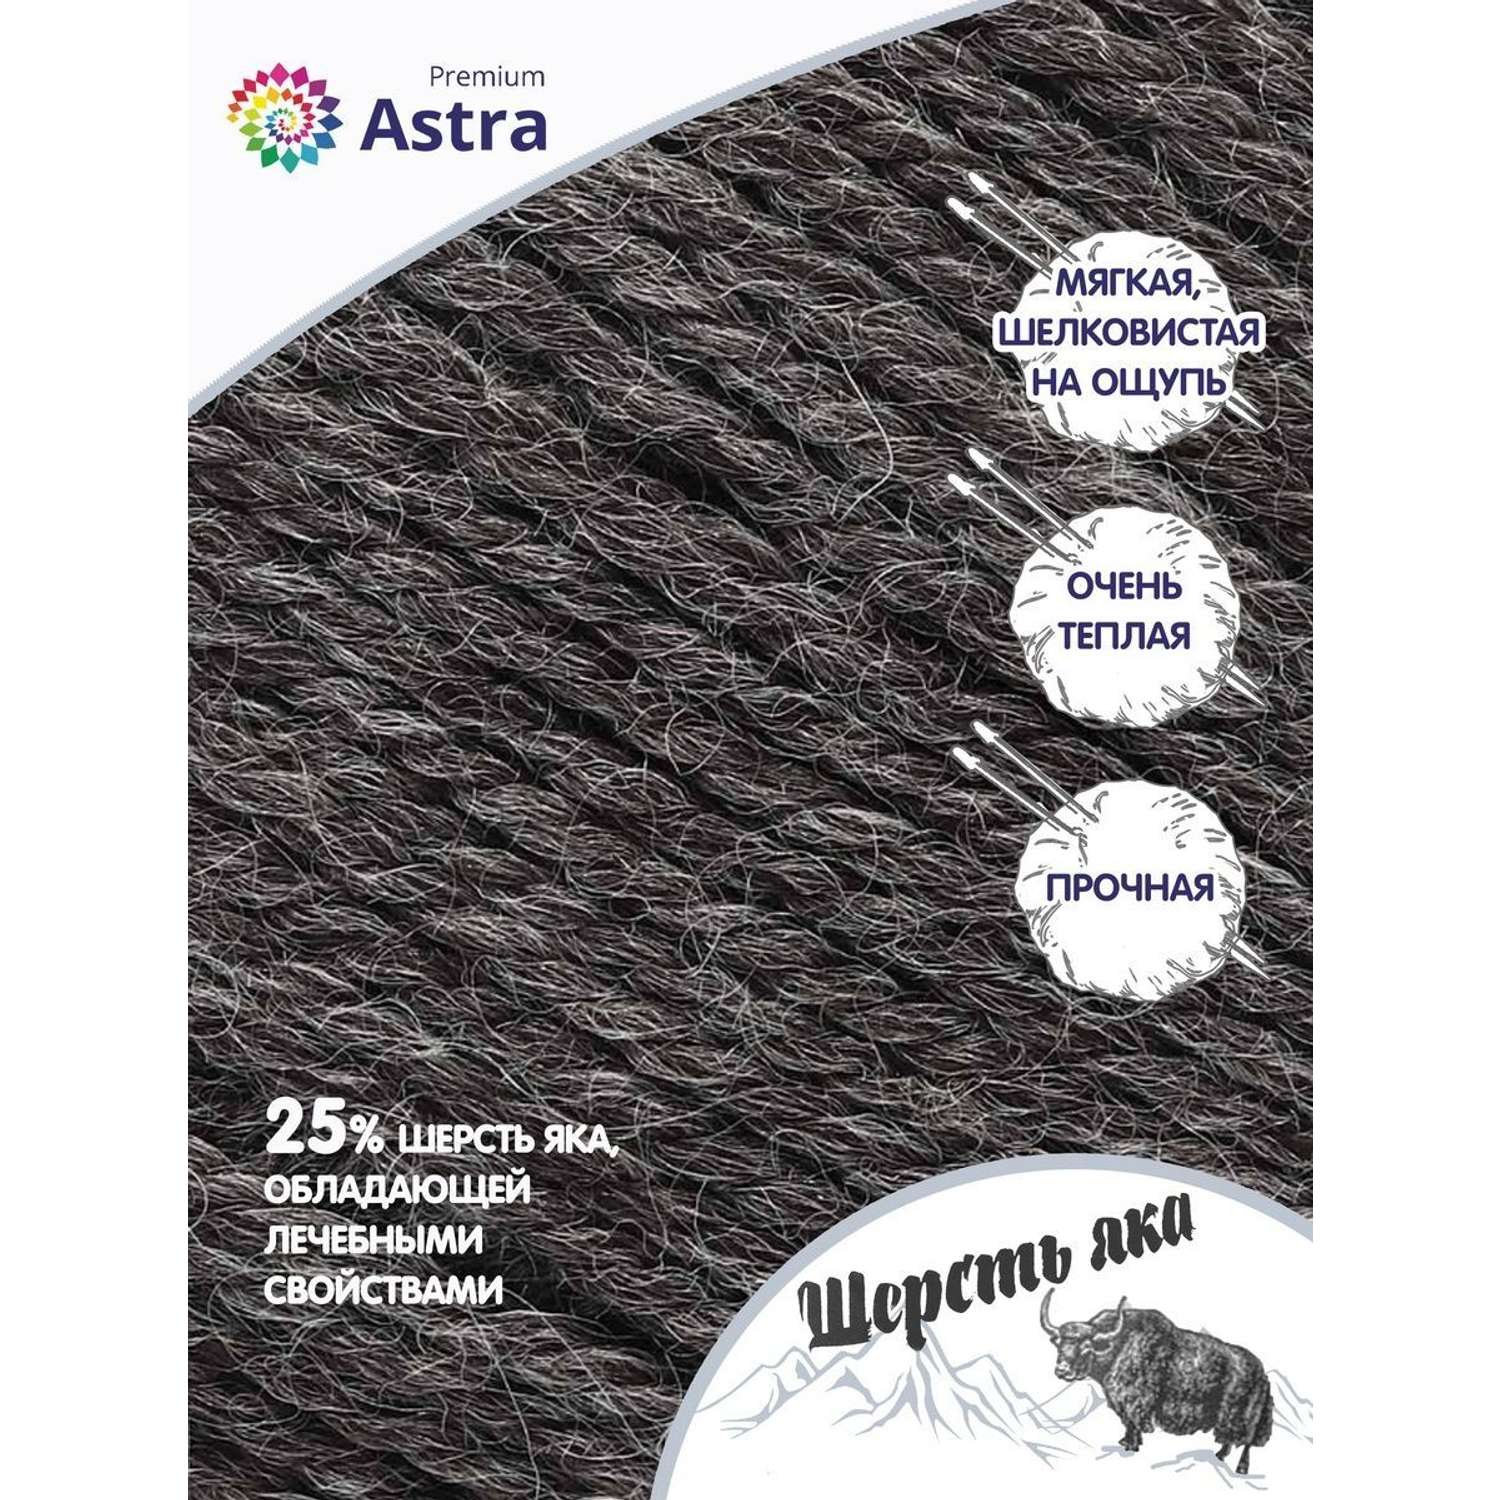 Пряжа Astra Premium Шерсть яка Yak wool теплая мягкая 100 г 120 м 18 серо-коричневый 2 мотка - фото 2